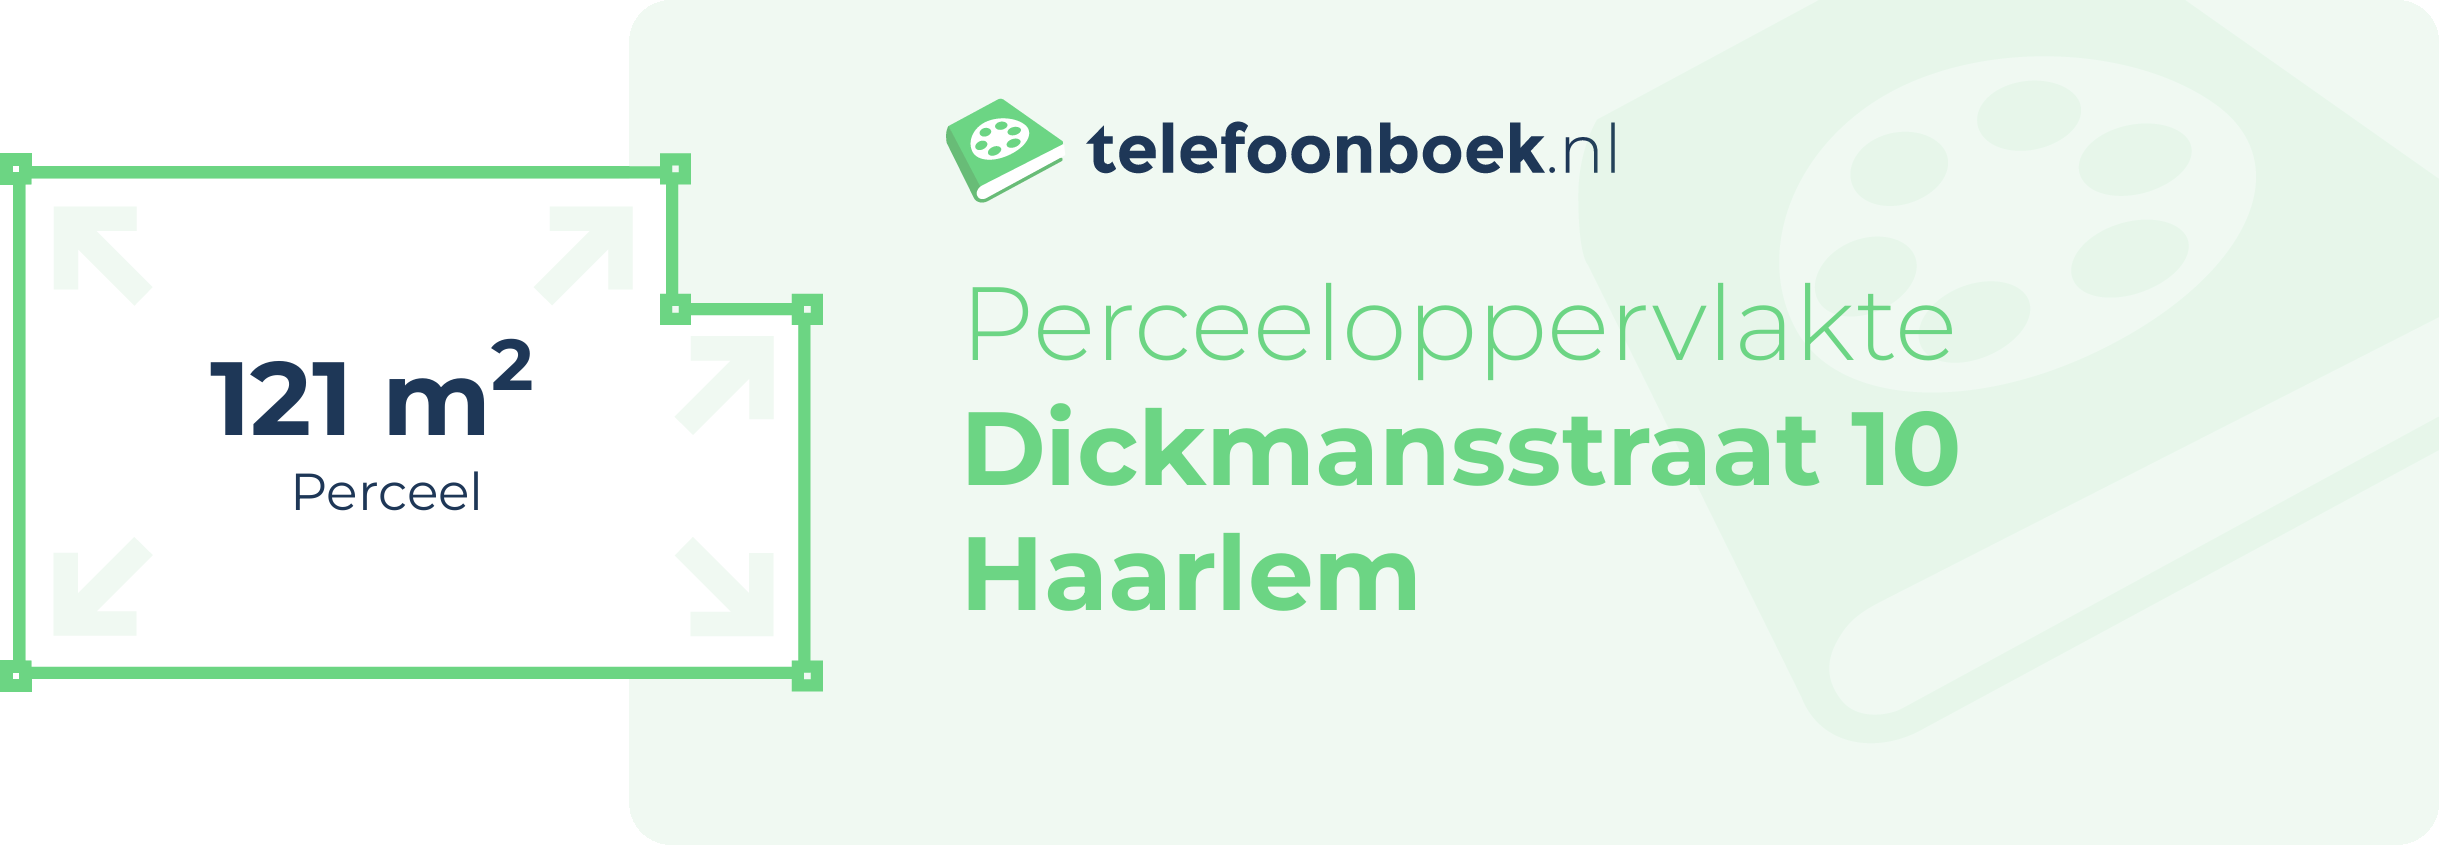 Perceeloppervlakte Dickmansstraat 10 Haarlem